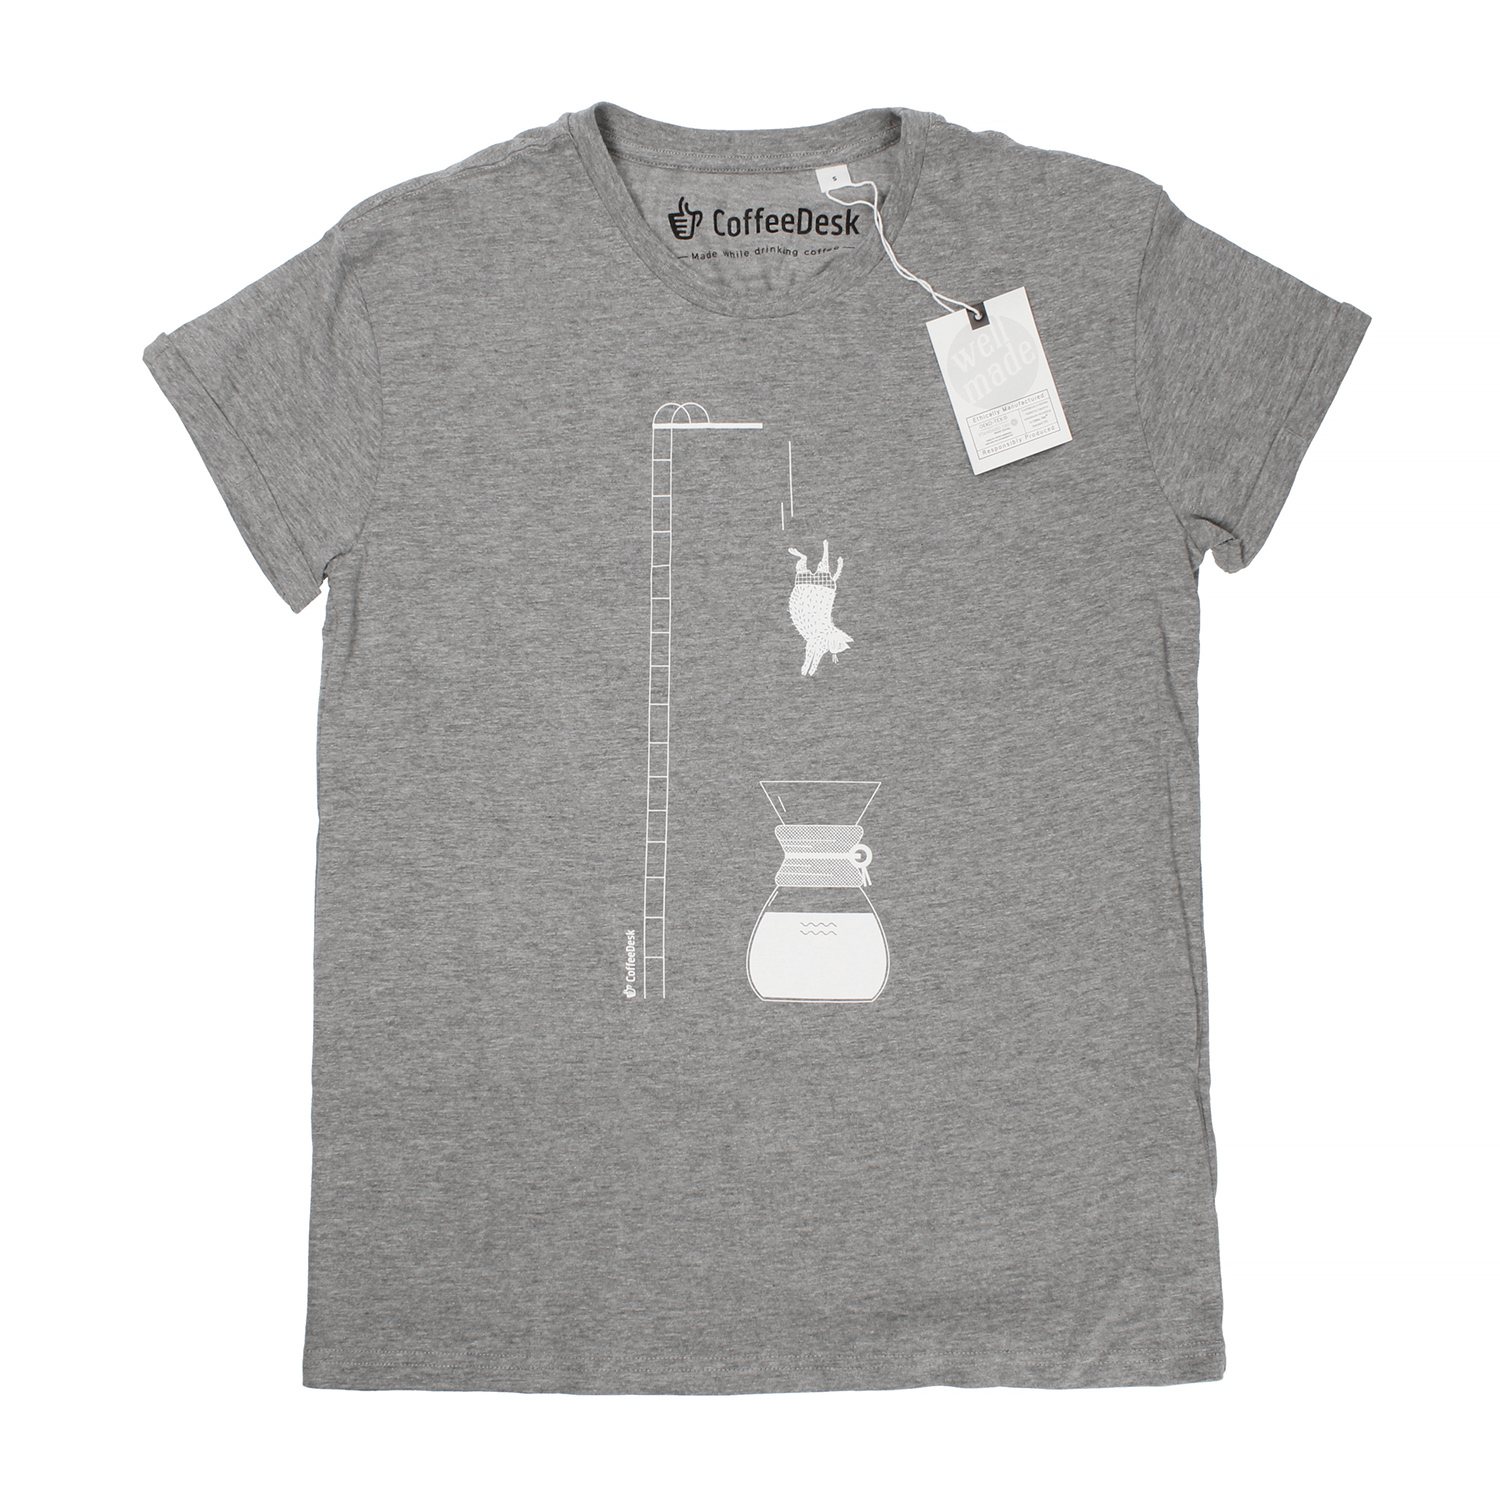 Coffeedesk Chemex Men's Grey T-shirt - L